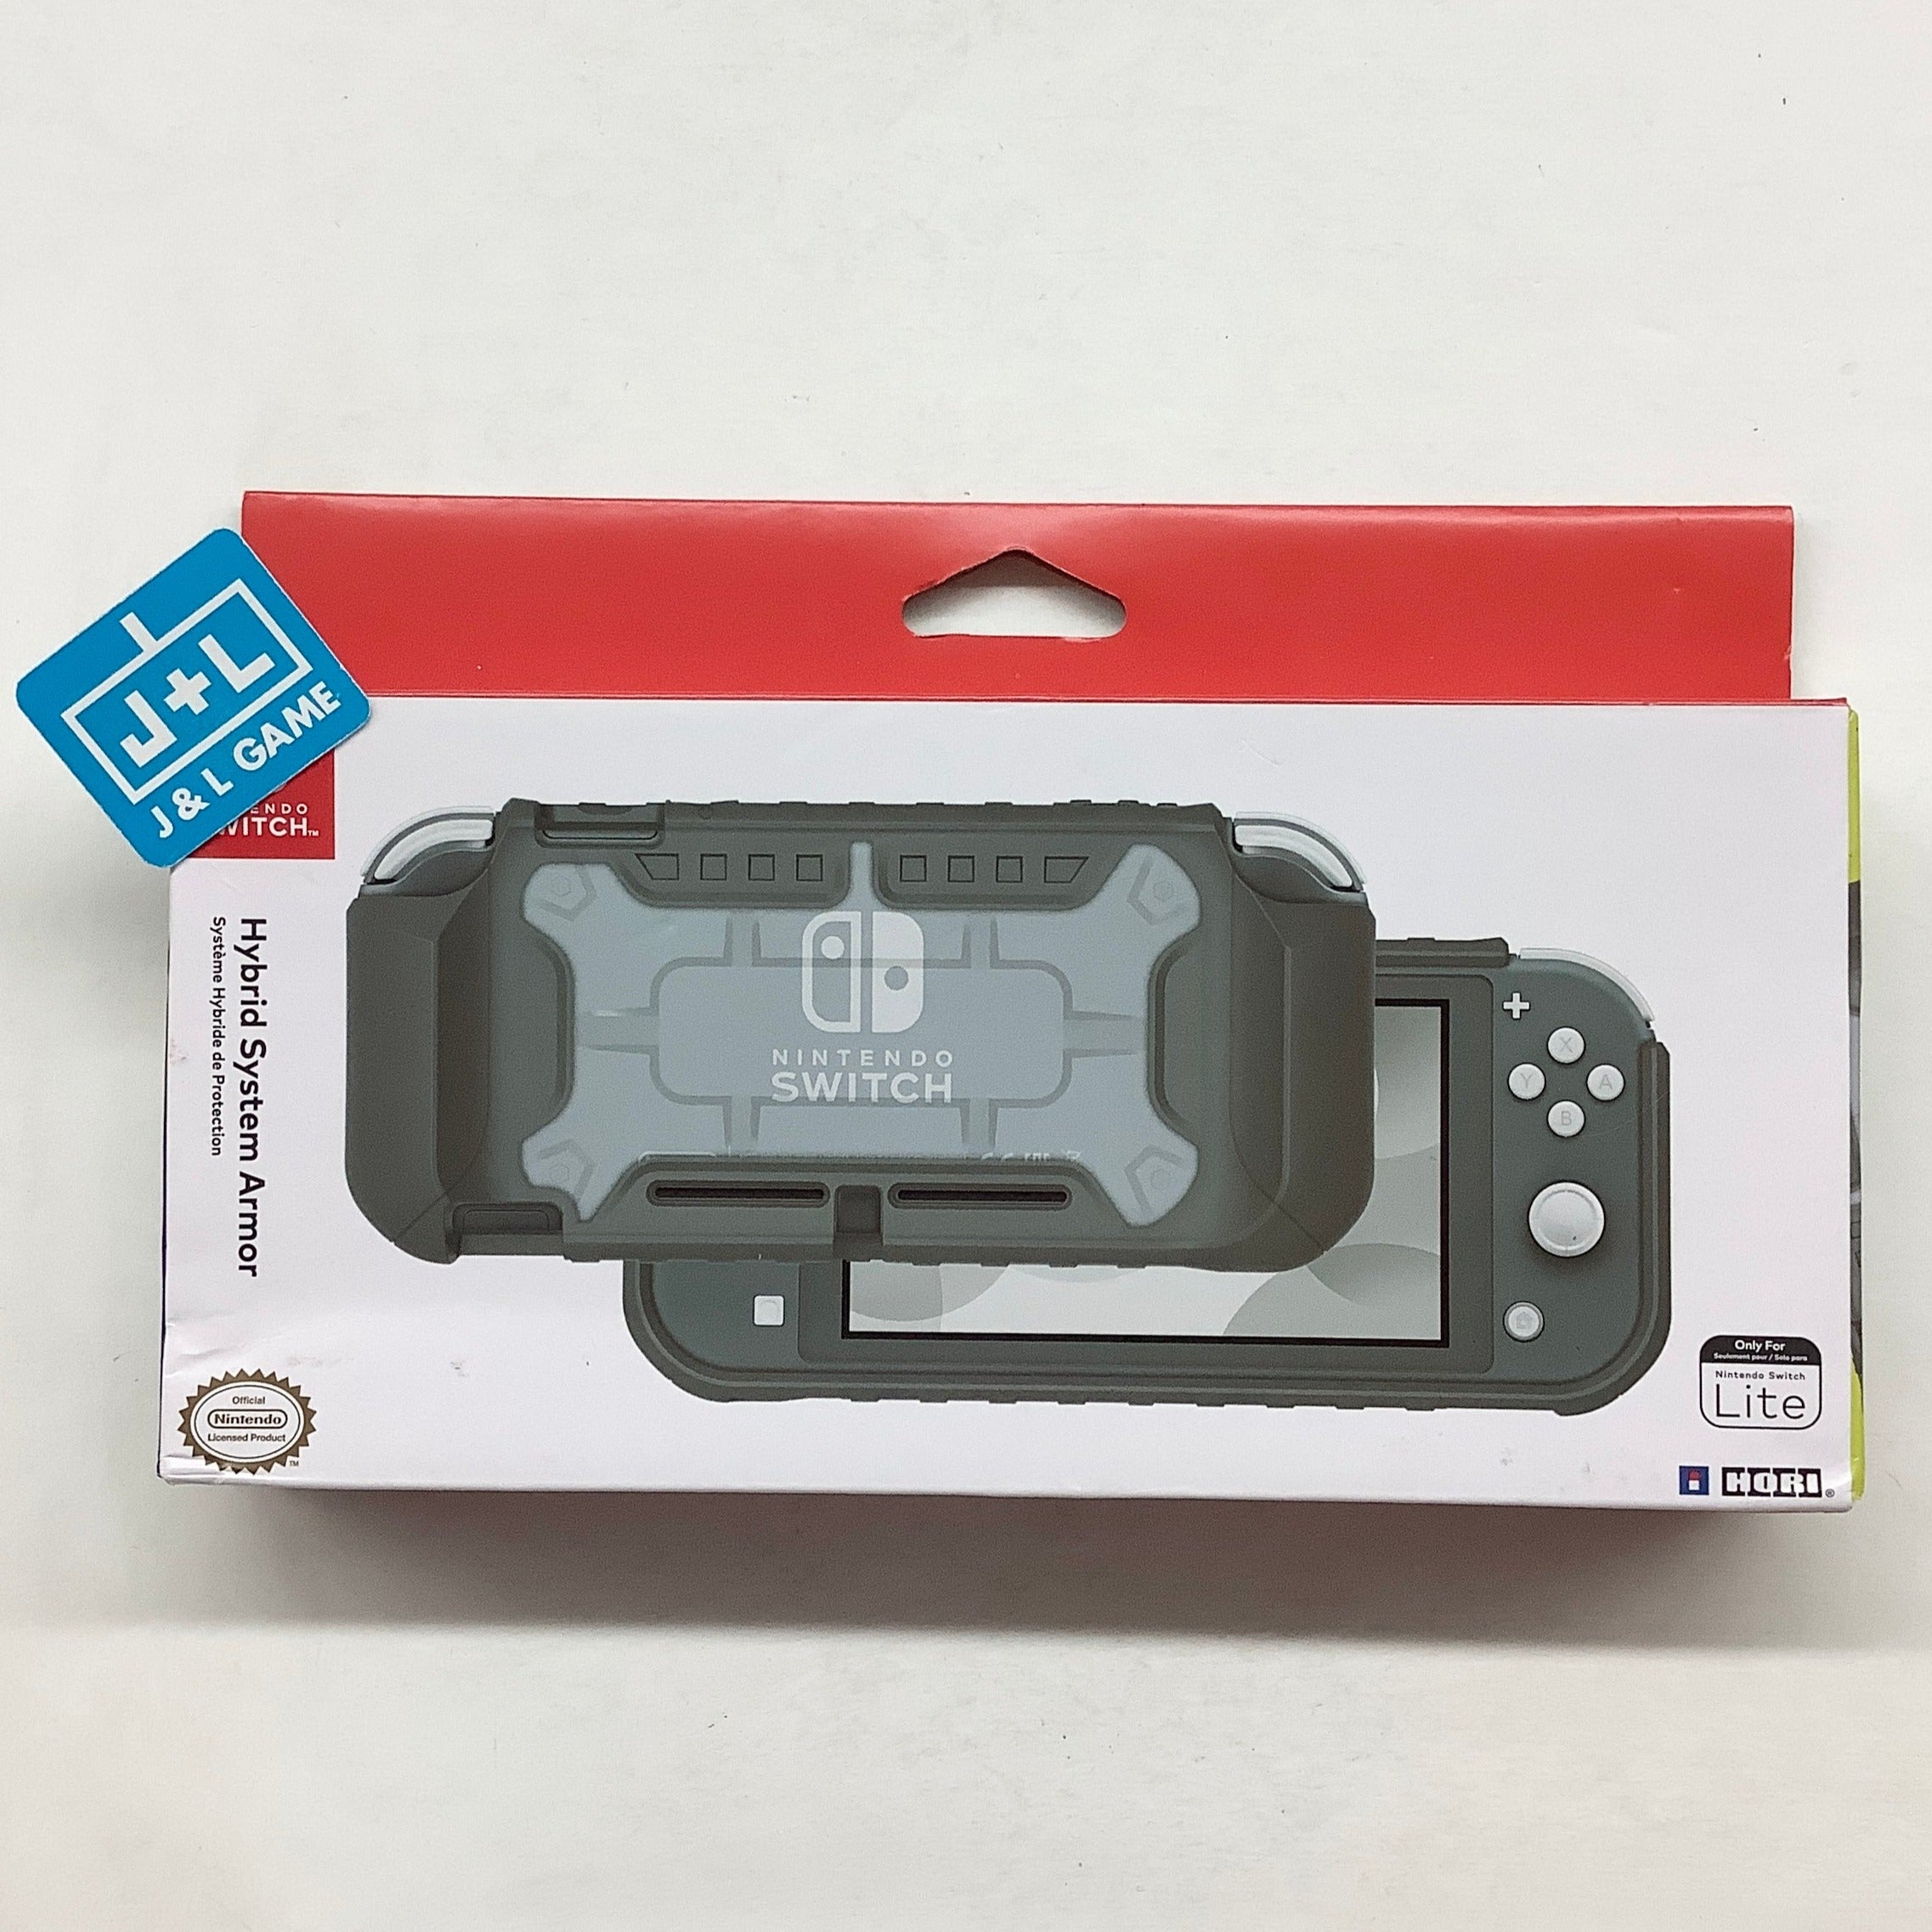 HORI Nintendo Switch Lite Hybrid System Armor (Gray) - (NSW) Nintendo Switch (European Import) Accessories Hori   